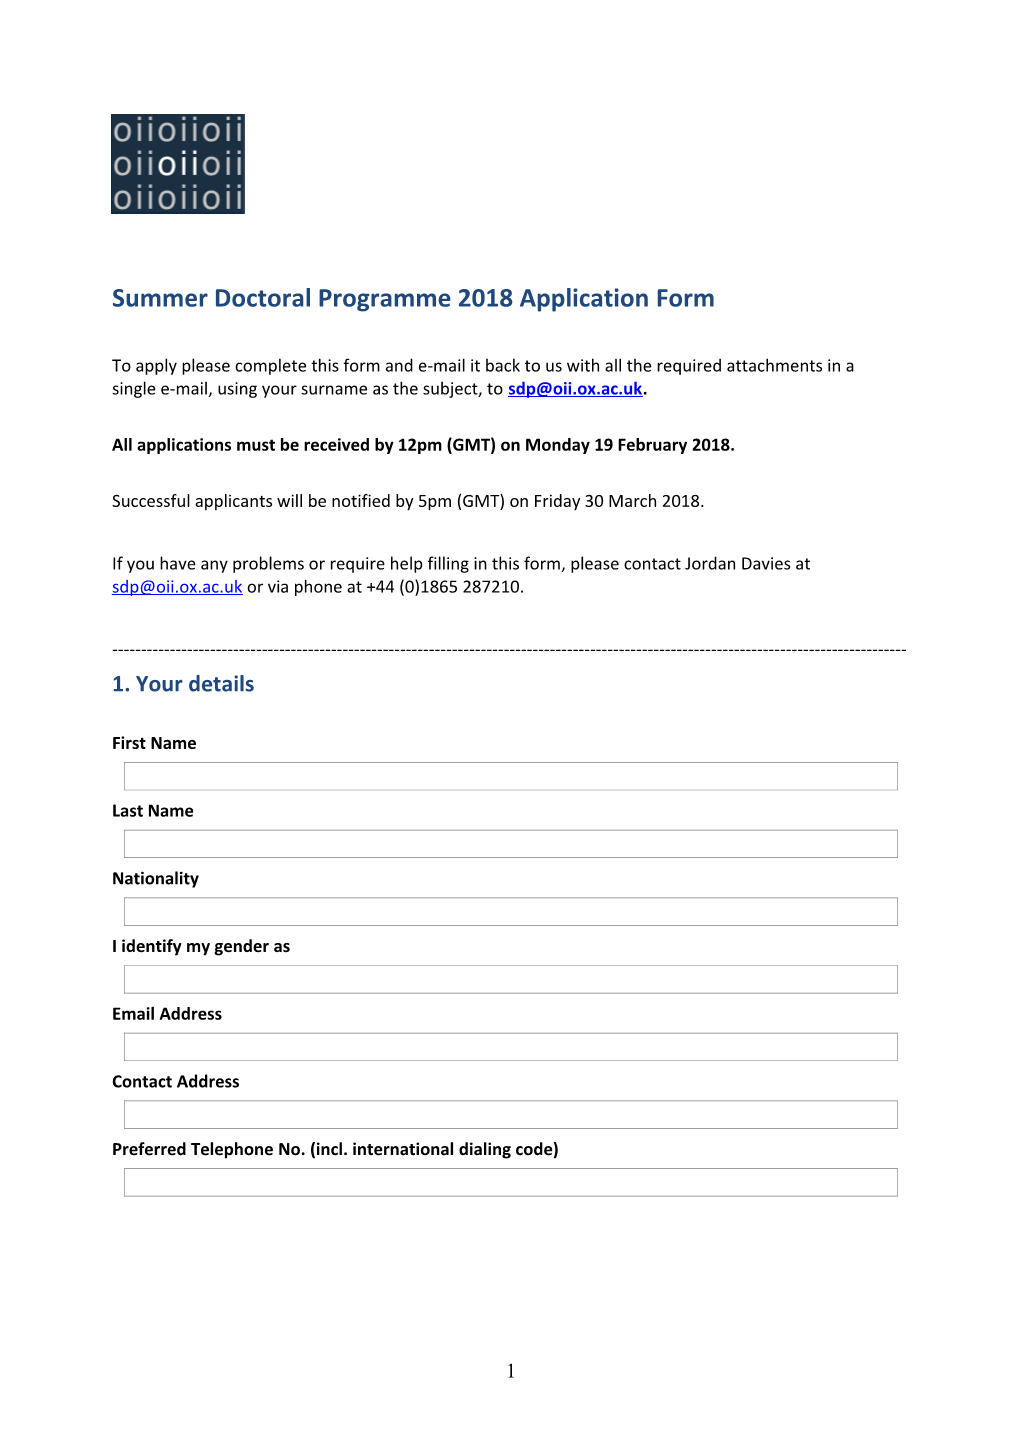 Summer Doctoral Programme 2004 Application Form